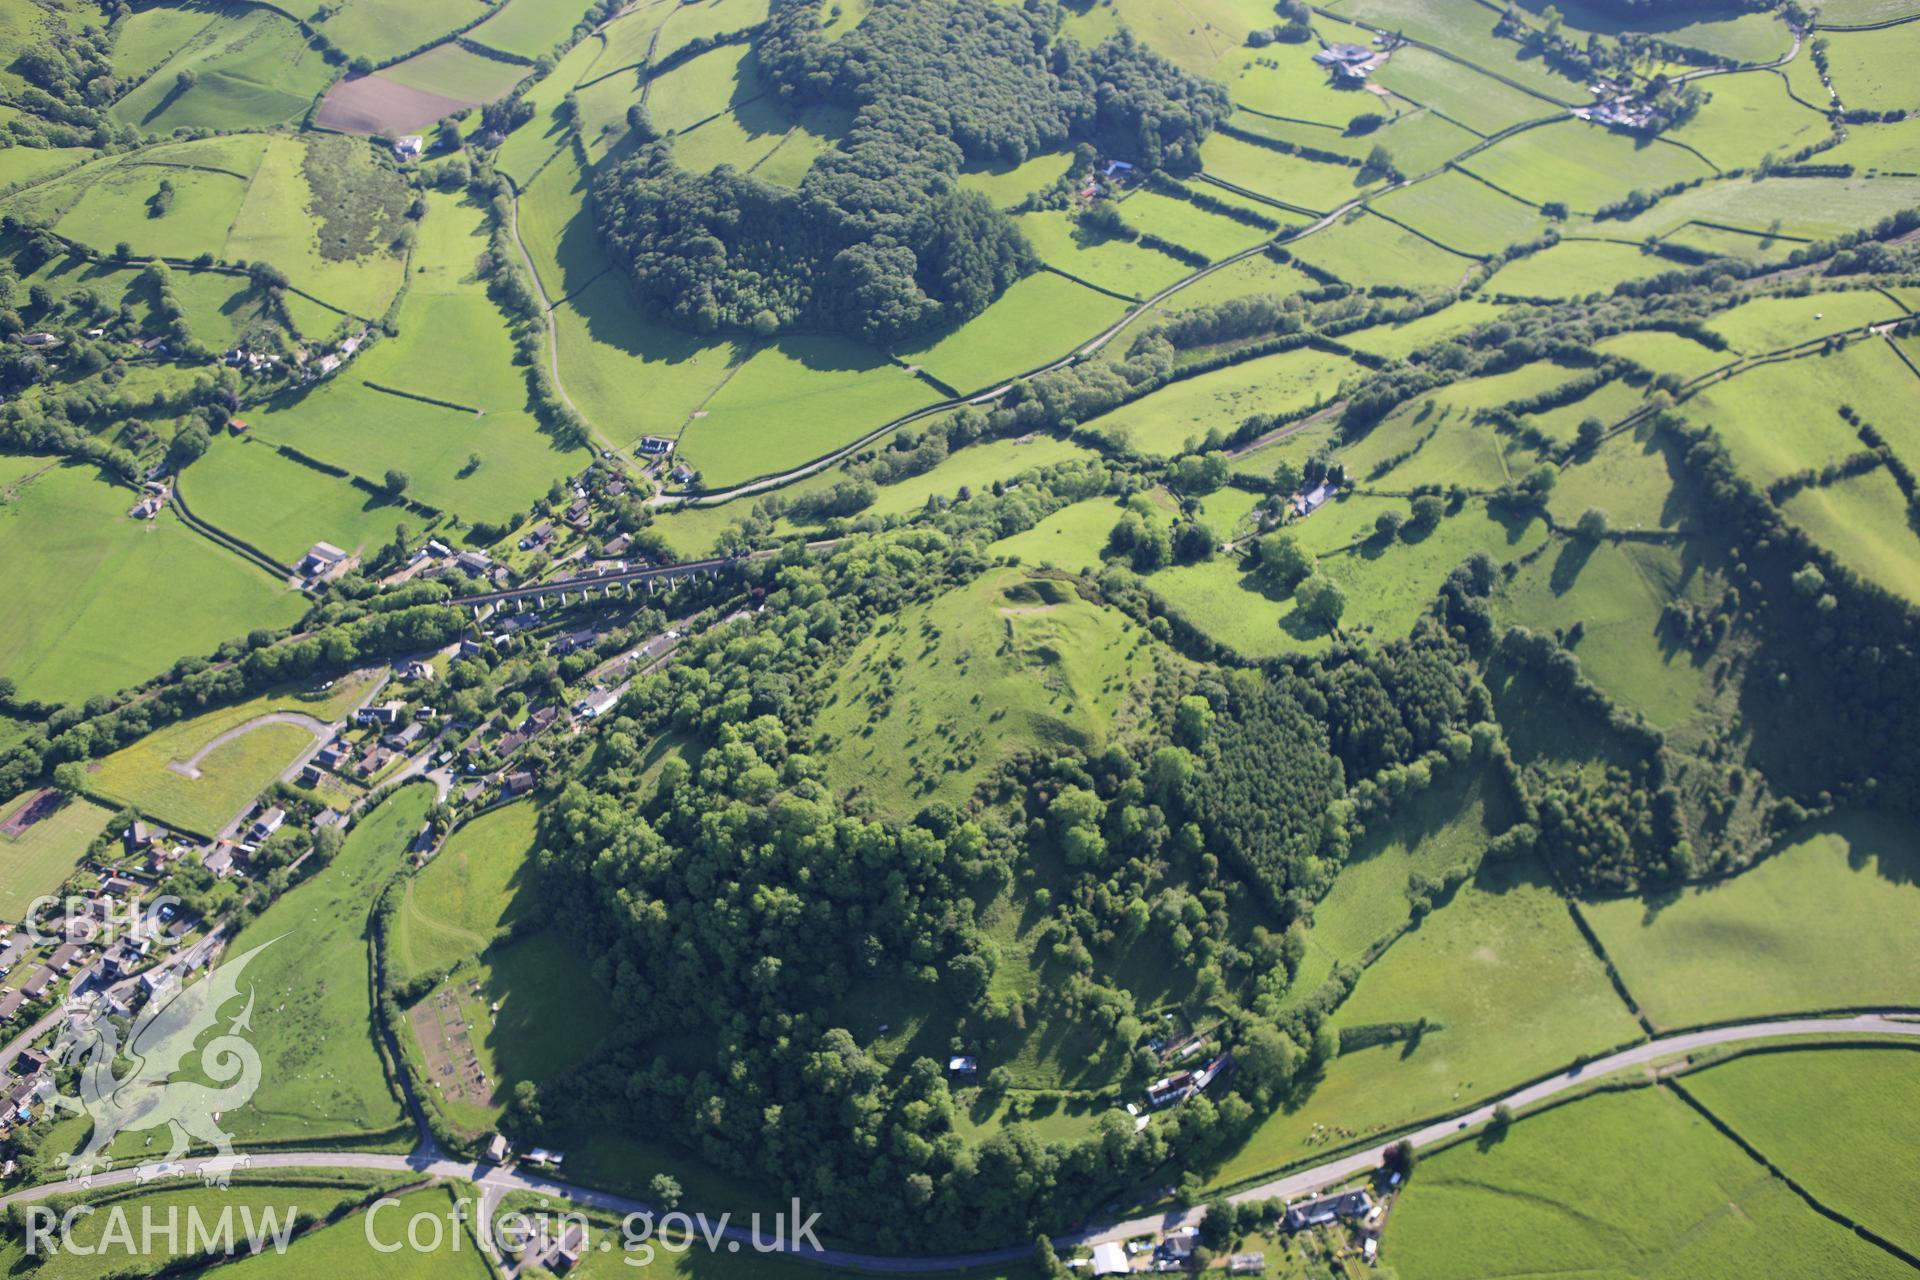 RCAHMW colour oblique aerial photograph of Cnwclas Castle. Taken on 11 June 2009 by Toby Driver